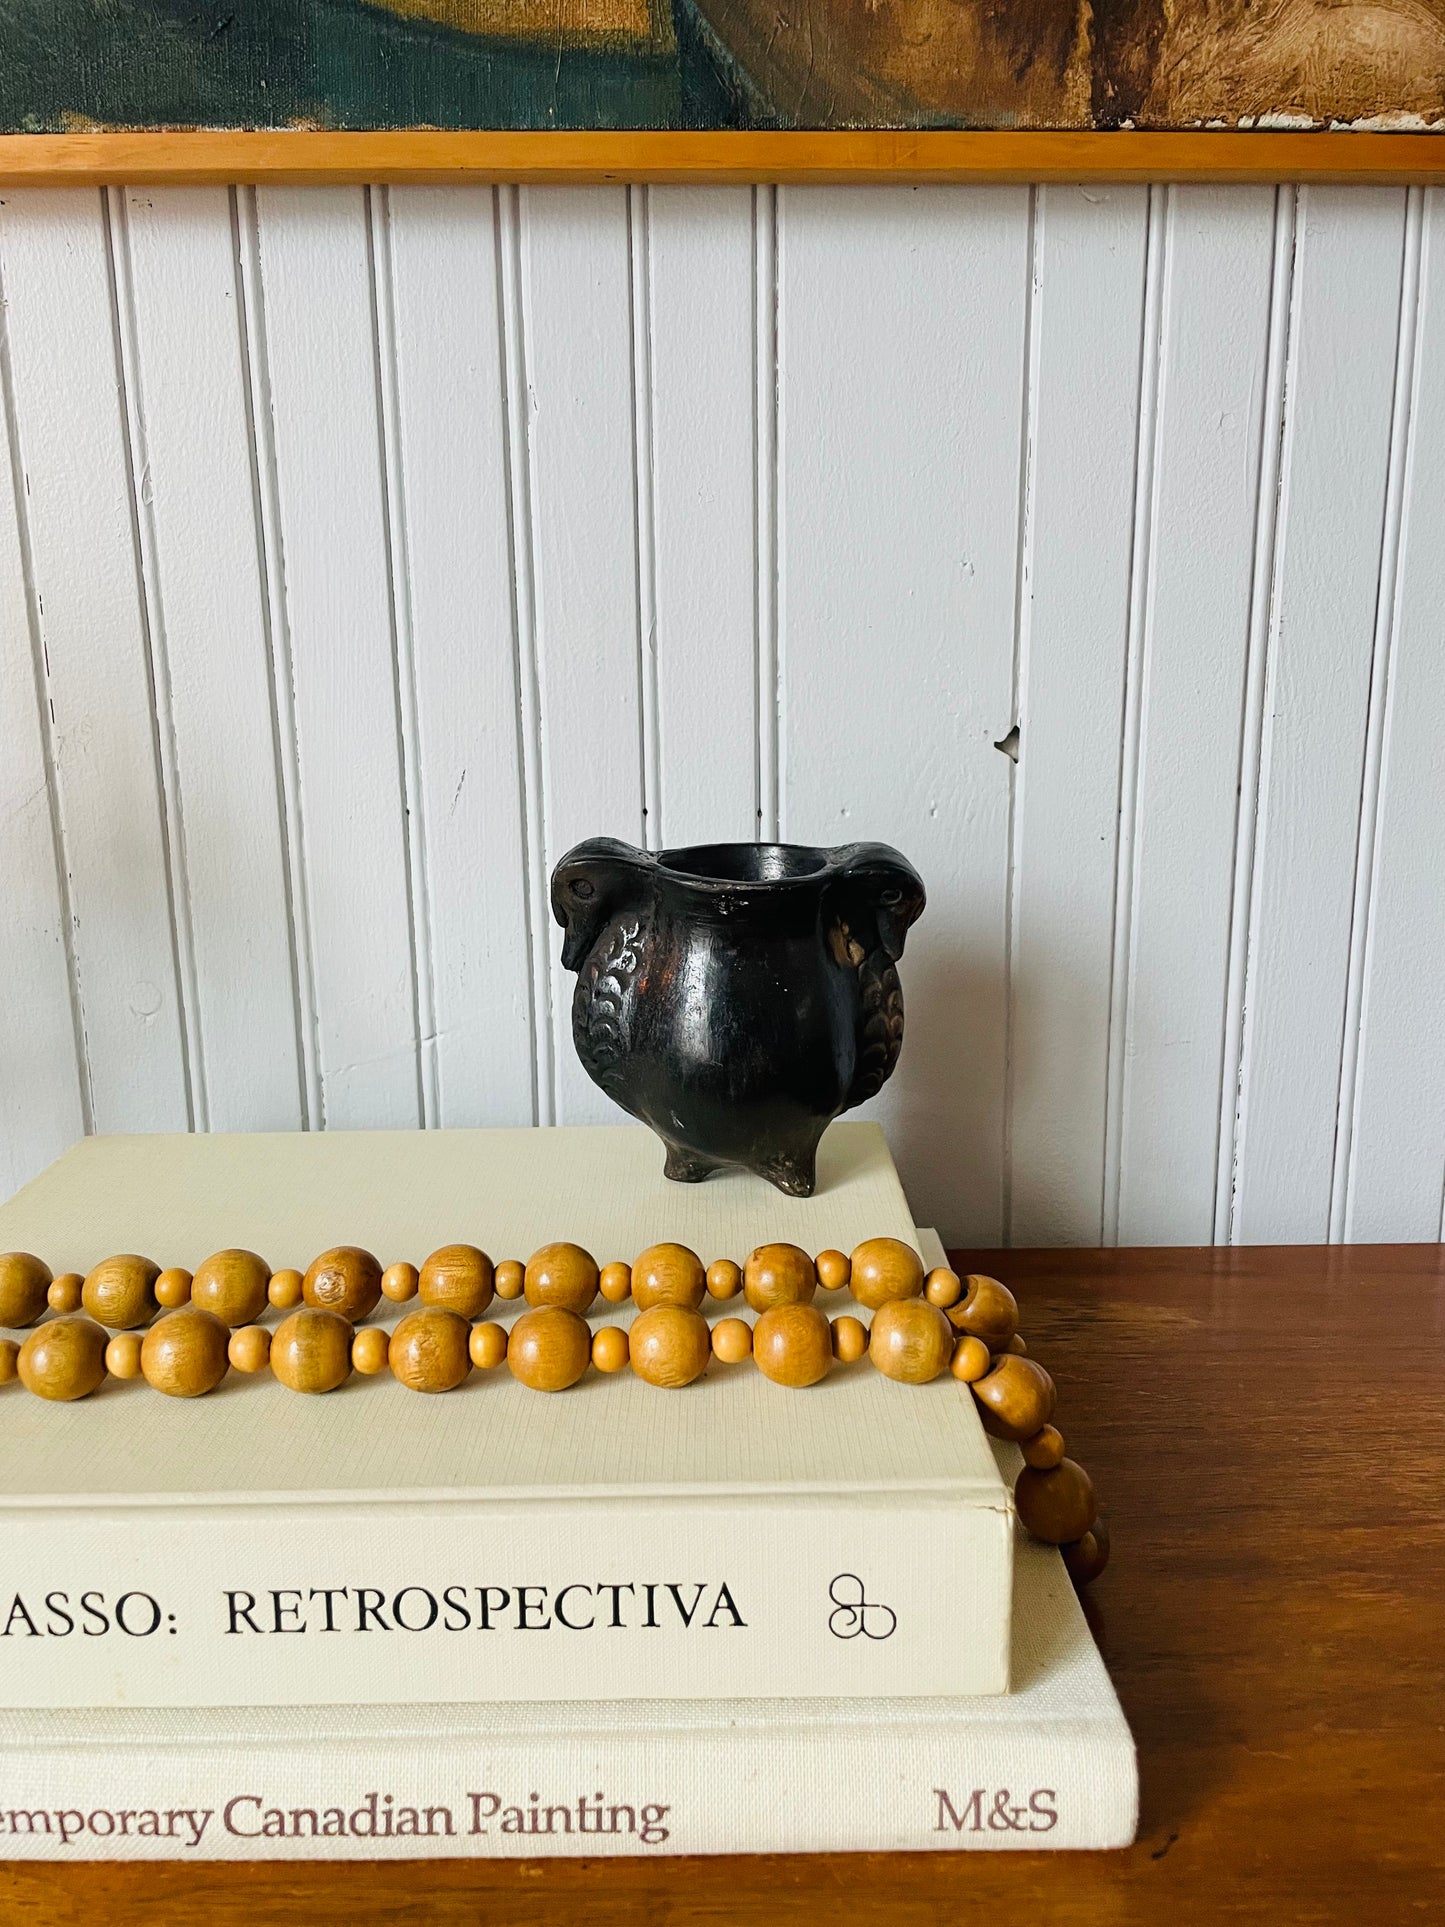 Barro Negro Black Clay Pottery from Oaxaca Mexico - Vase Cup with Tripod Feet & Turkey Bird Design